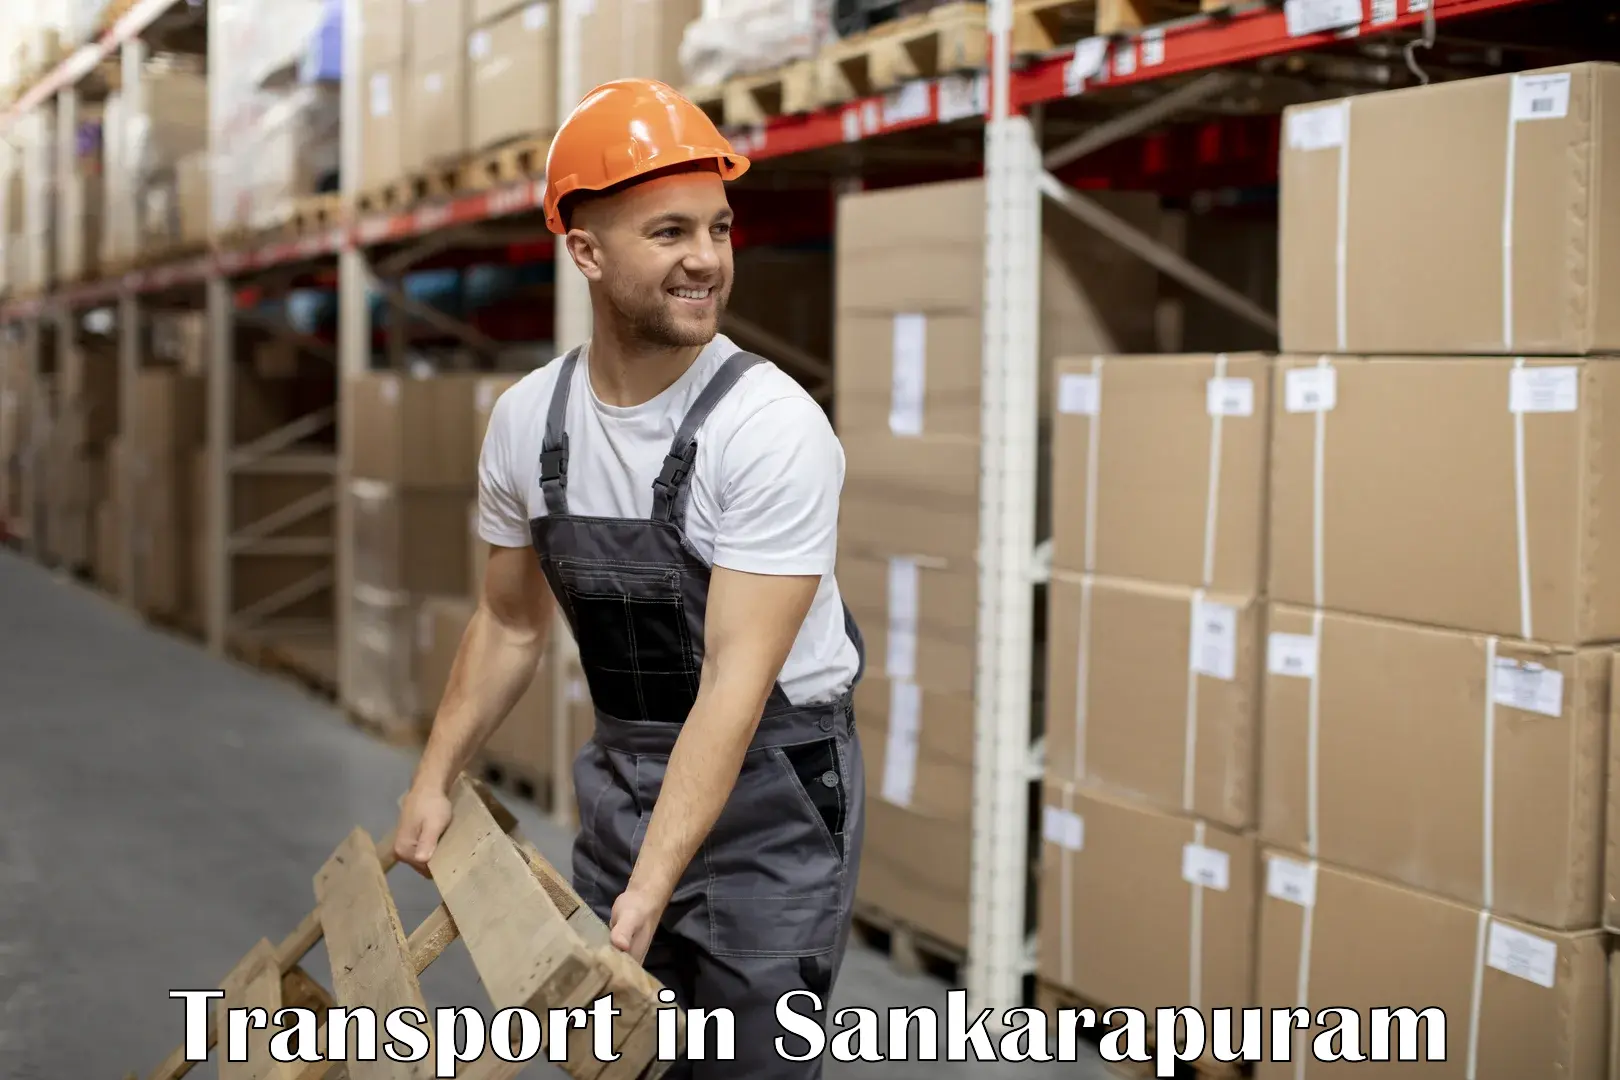 Express transport services in Sankarapuram